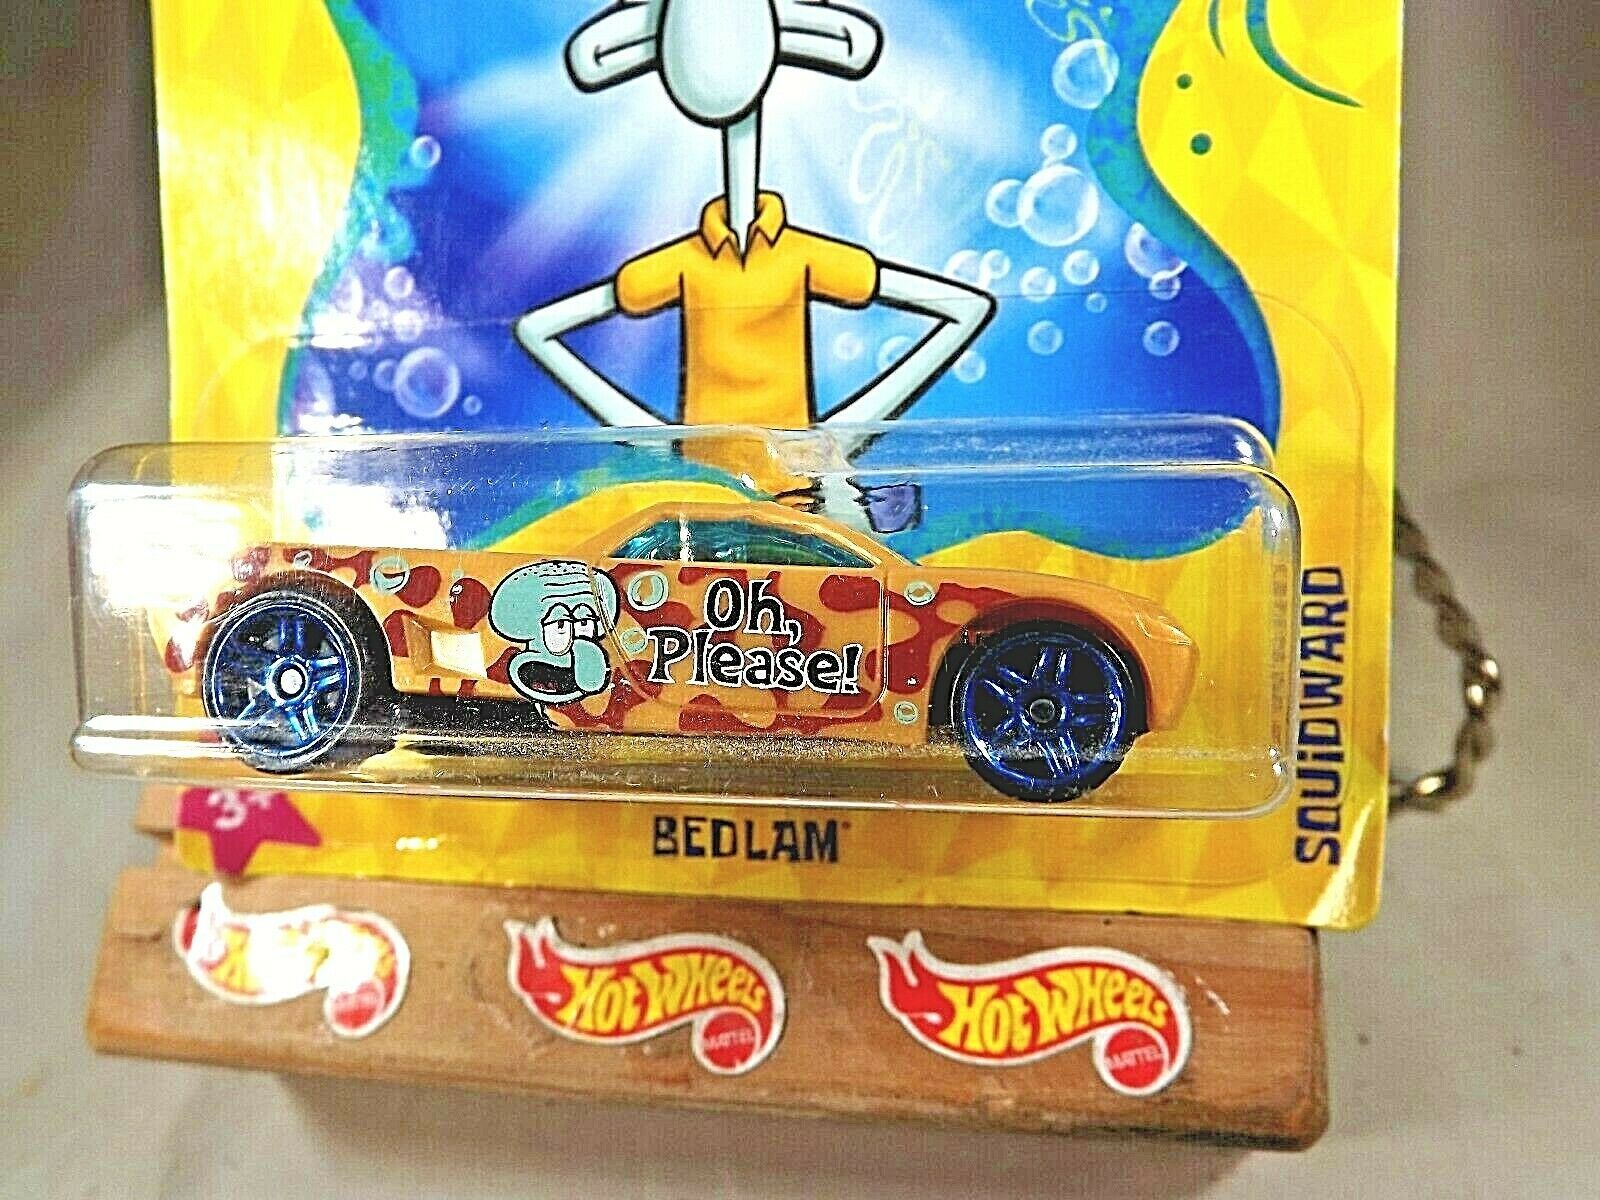 Bedlam 4/6 SquidwardNew Hot Wheels2019 Spongebob Squarepants Series 